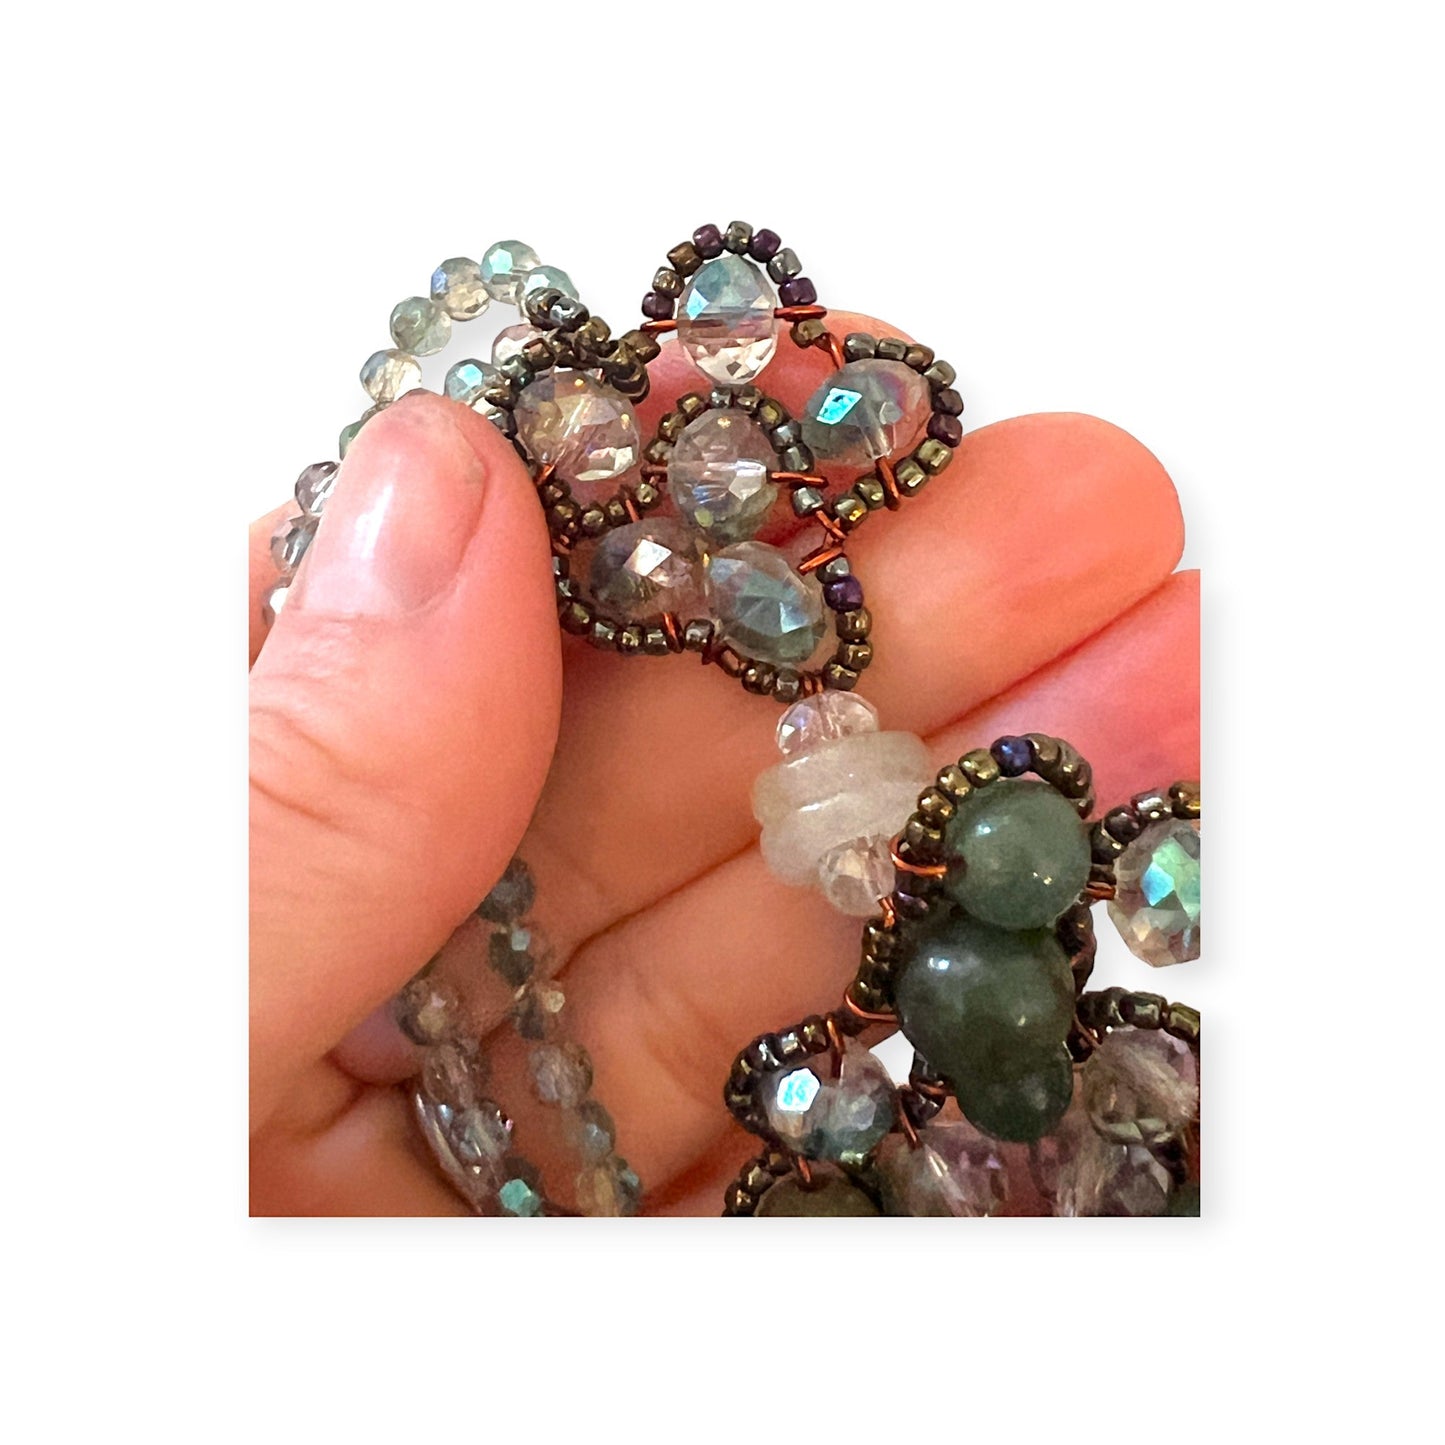 Jade and crystal beaded organic pendant necklace - Sundara Joon